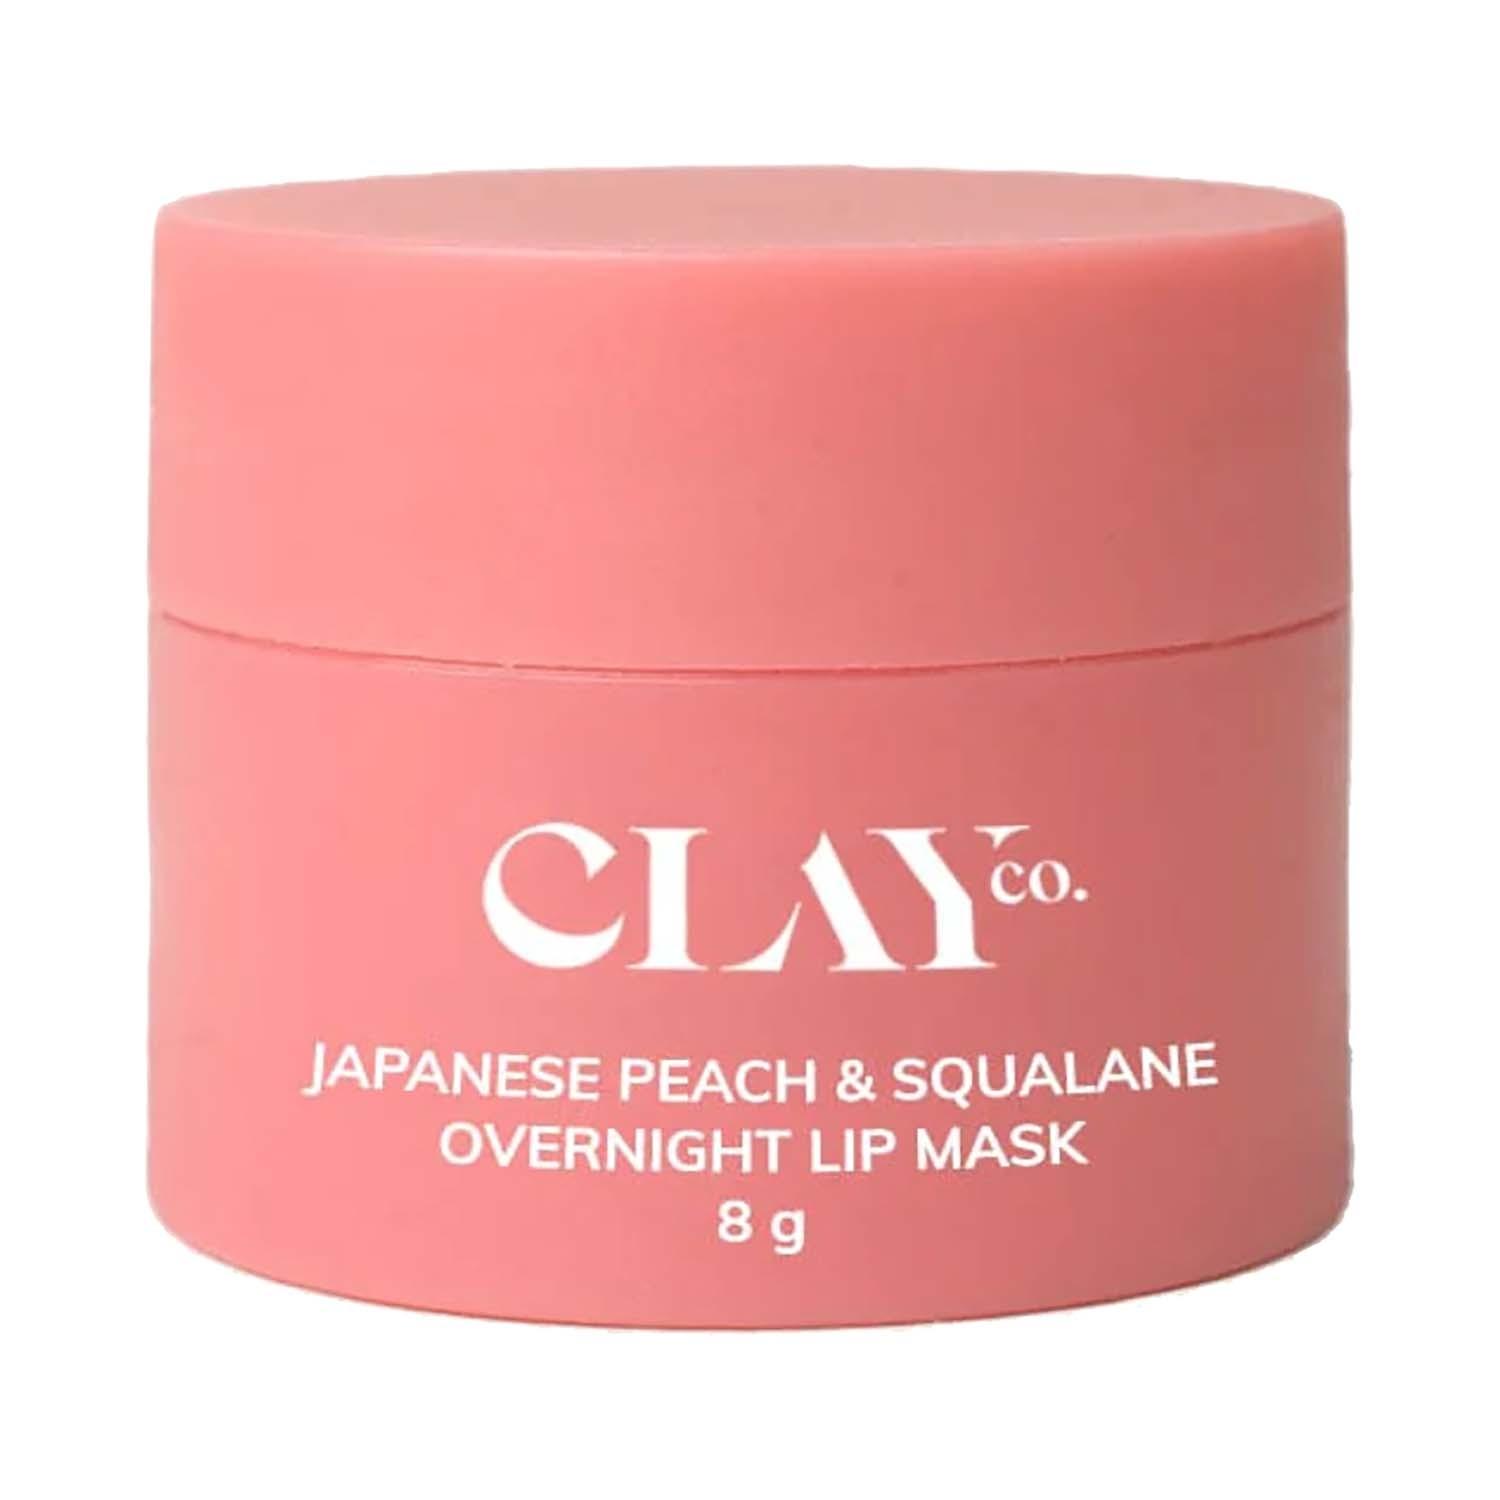 clayco japanese peach & squalane overnight lip mask (8g)